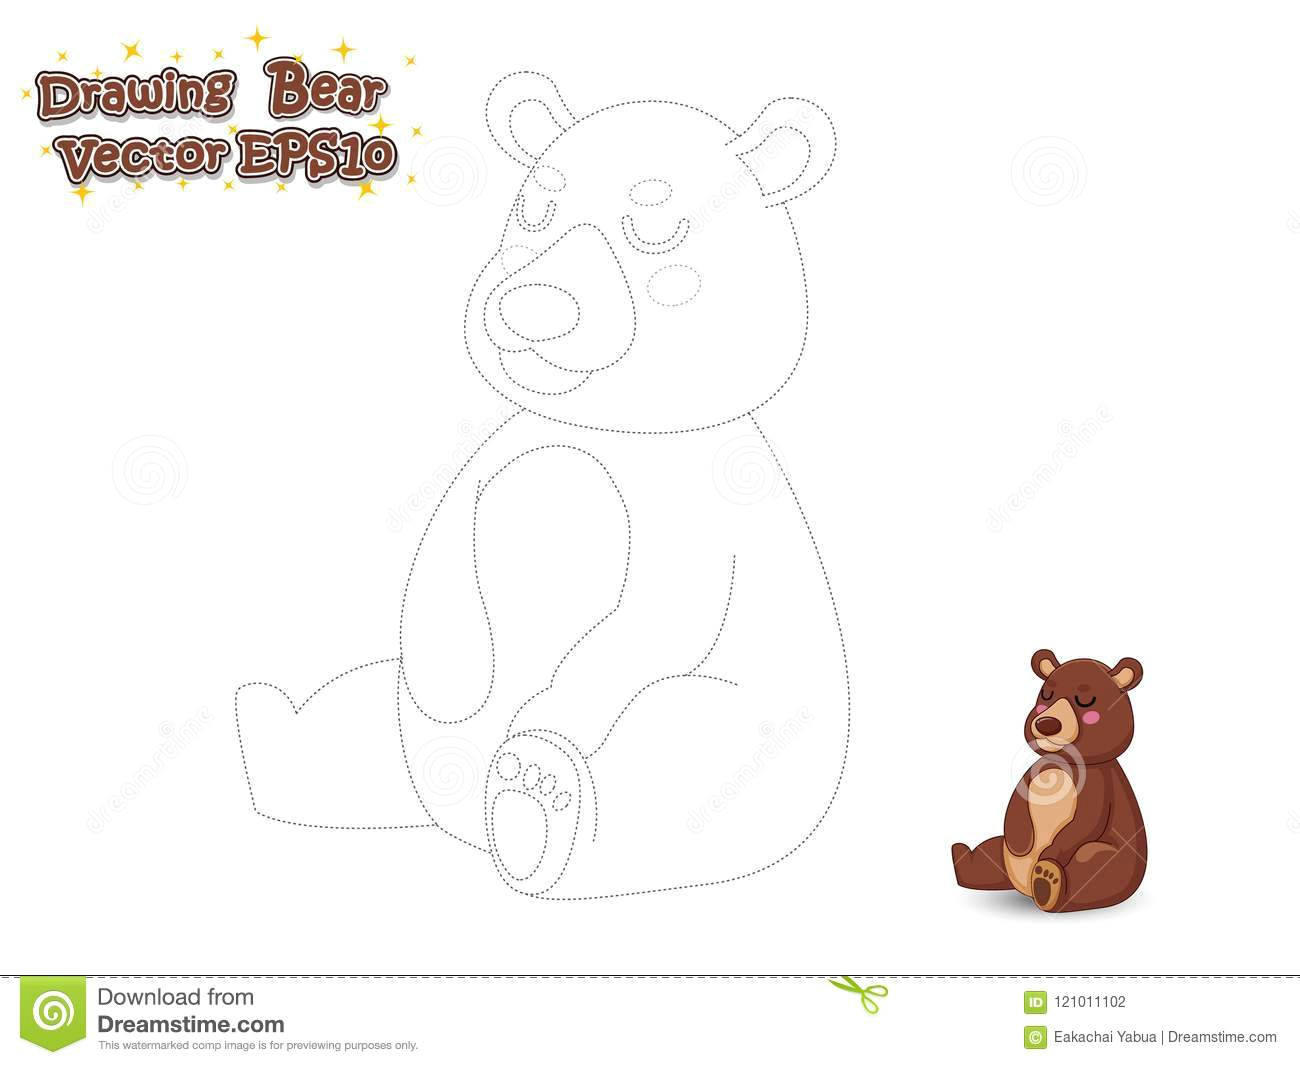 Drawing Cartoon Teddy Bear Drawing and Paint Cute Bear Cartoon Educational Game for Kids